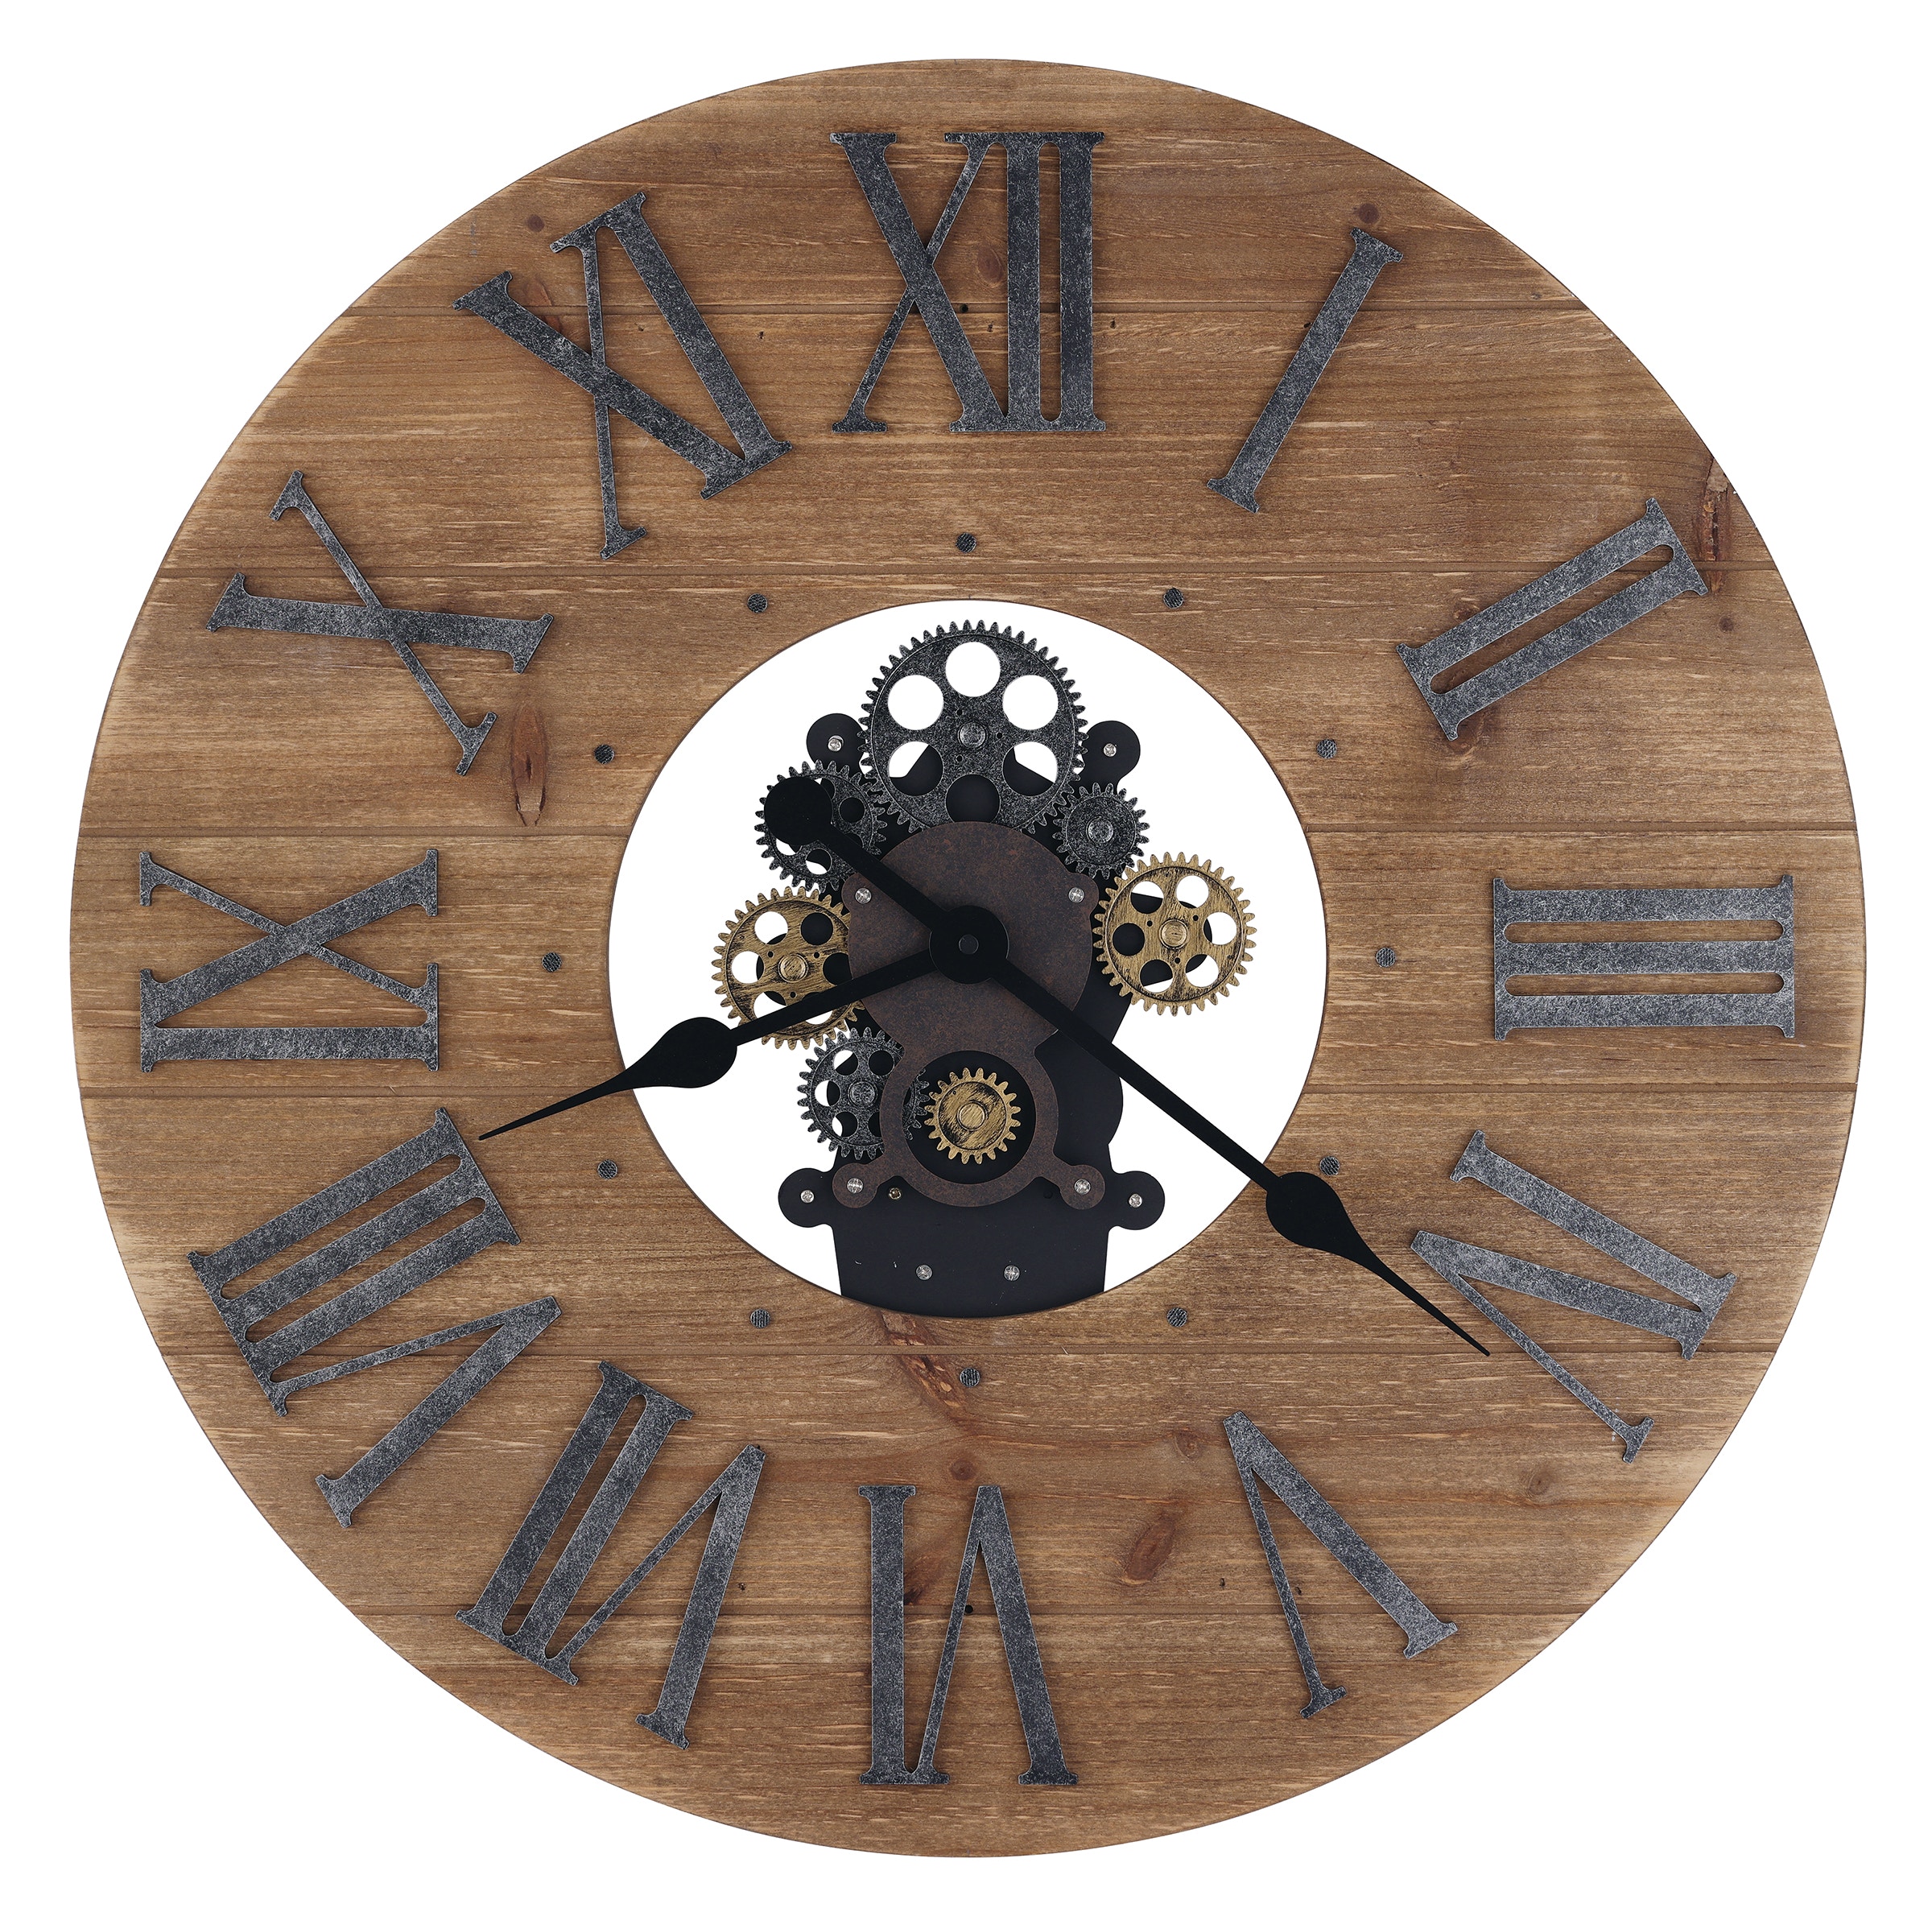 CAQLEGE Wall Clocks Wall Clocks Numerals Indoor Outdoor Garden Hanging  Ornament Round Home Decoration (Color Black)